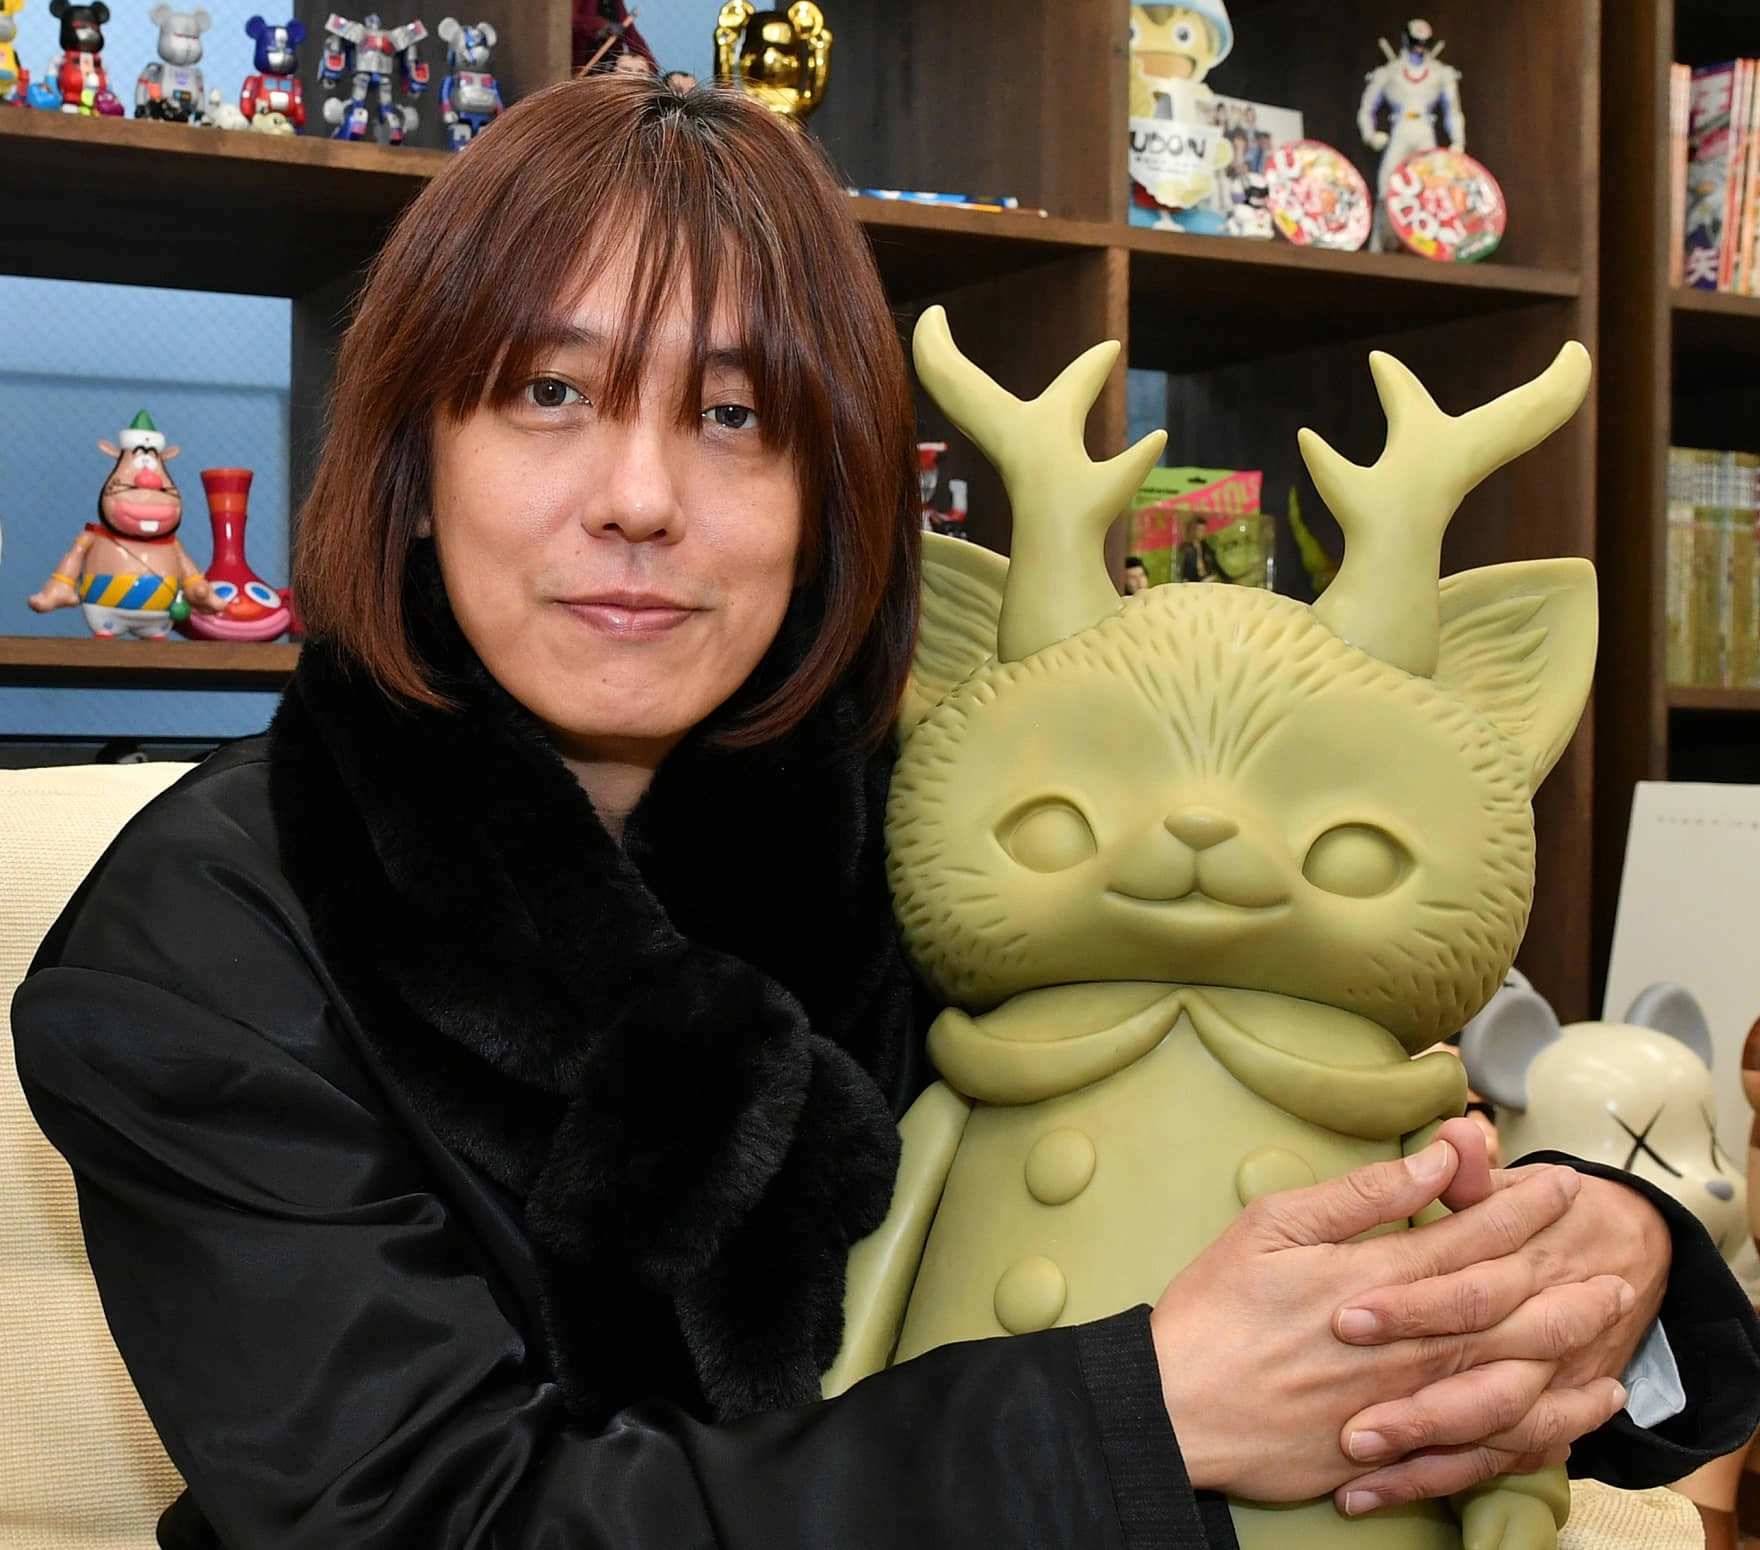 Bearbrick founder Tatsuhiko Akashi takes his creation on a global